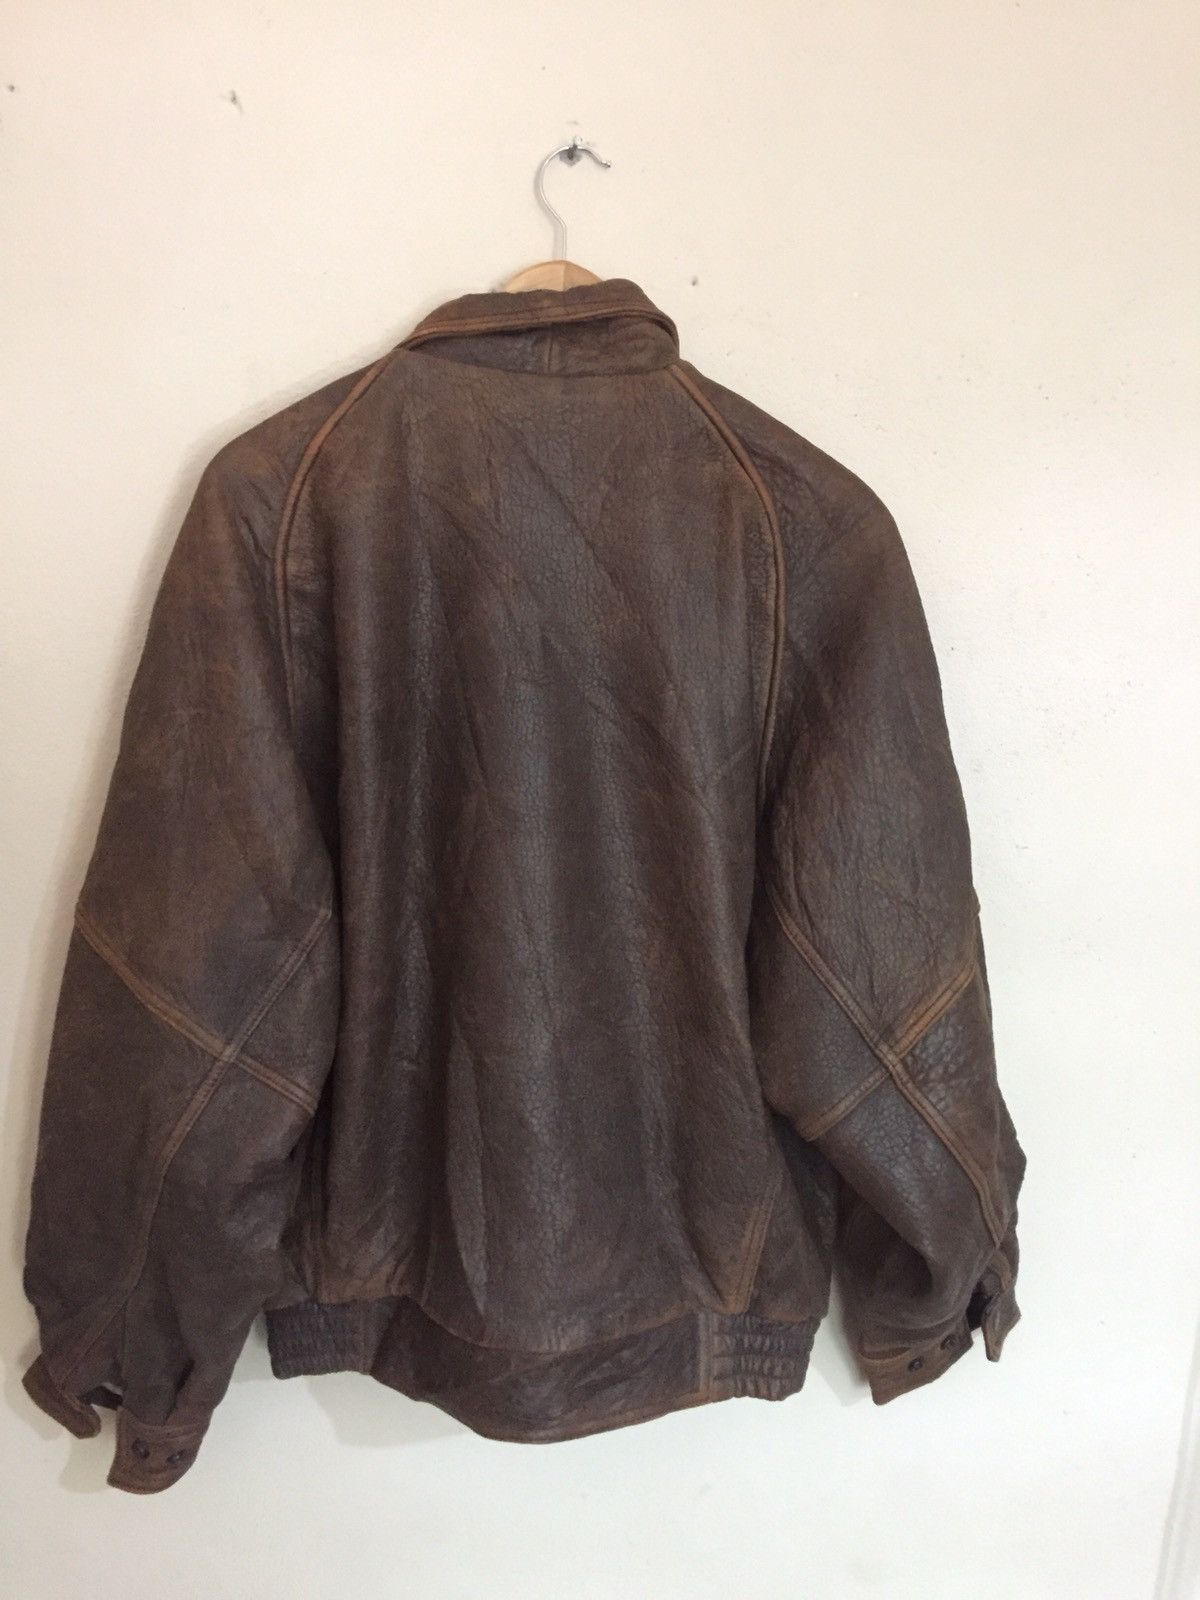 Vintage Vintage marilyn monroe leather jacket Size US L / EU 52-54 / 3 - 4 Thumbnail